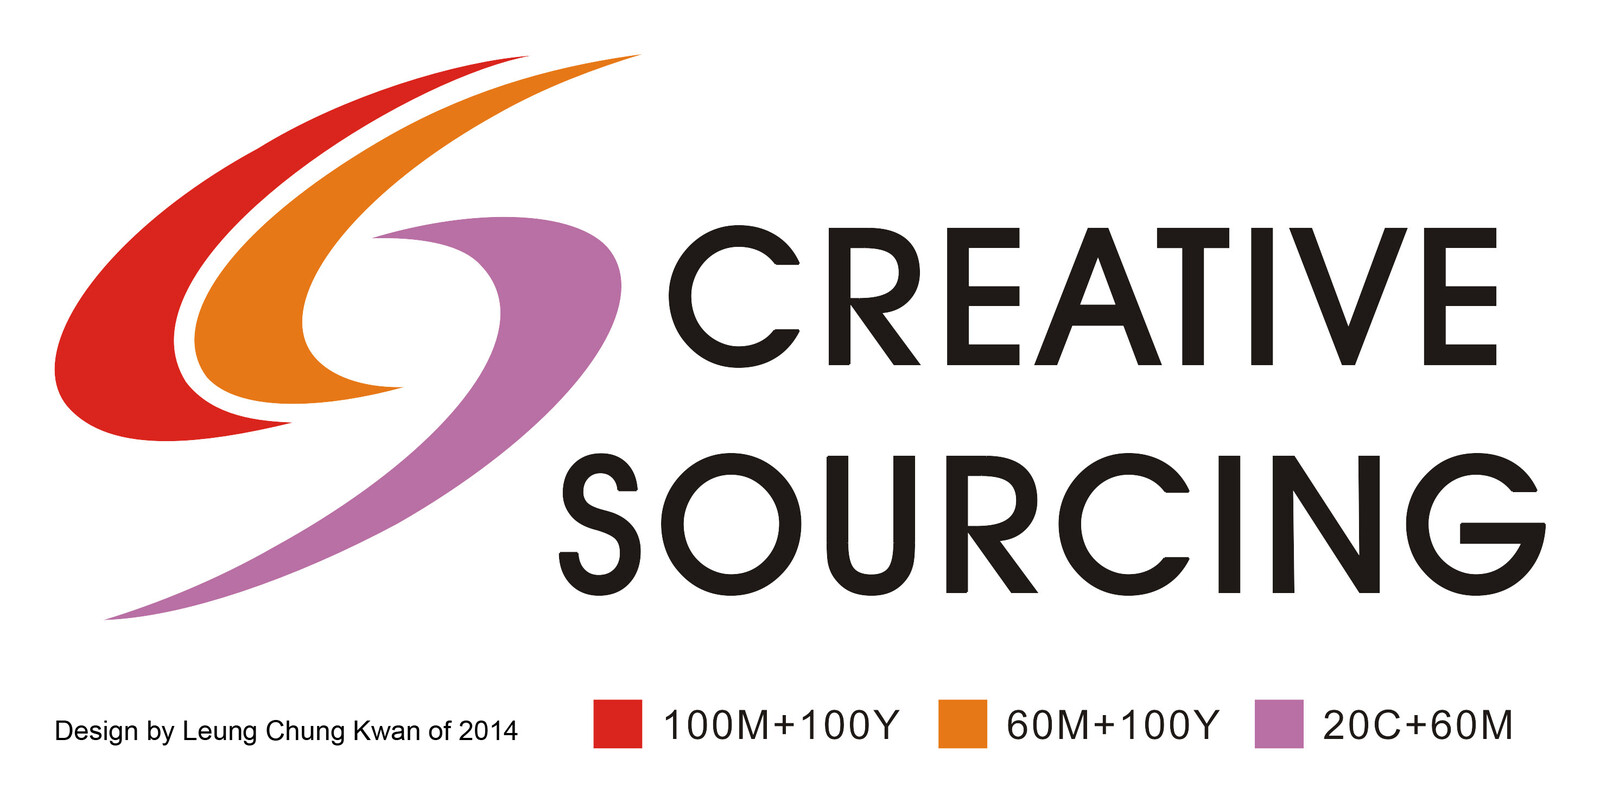 💎 Logo | Design by Leung Chung Kwan on 2014 💎
Brand Name︰Creative Sourcing